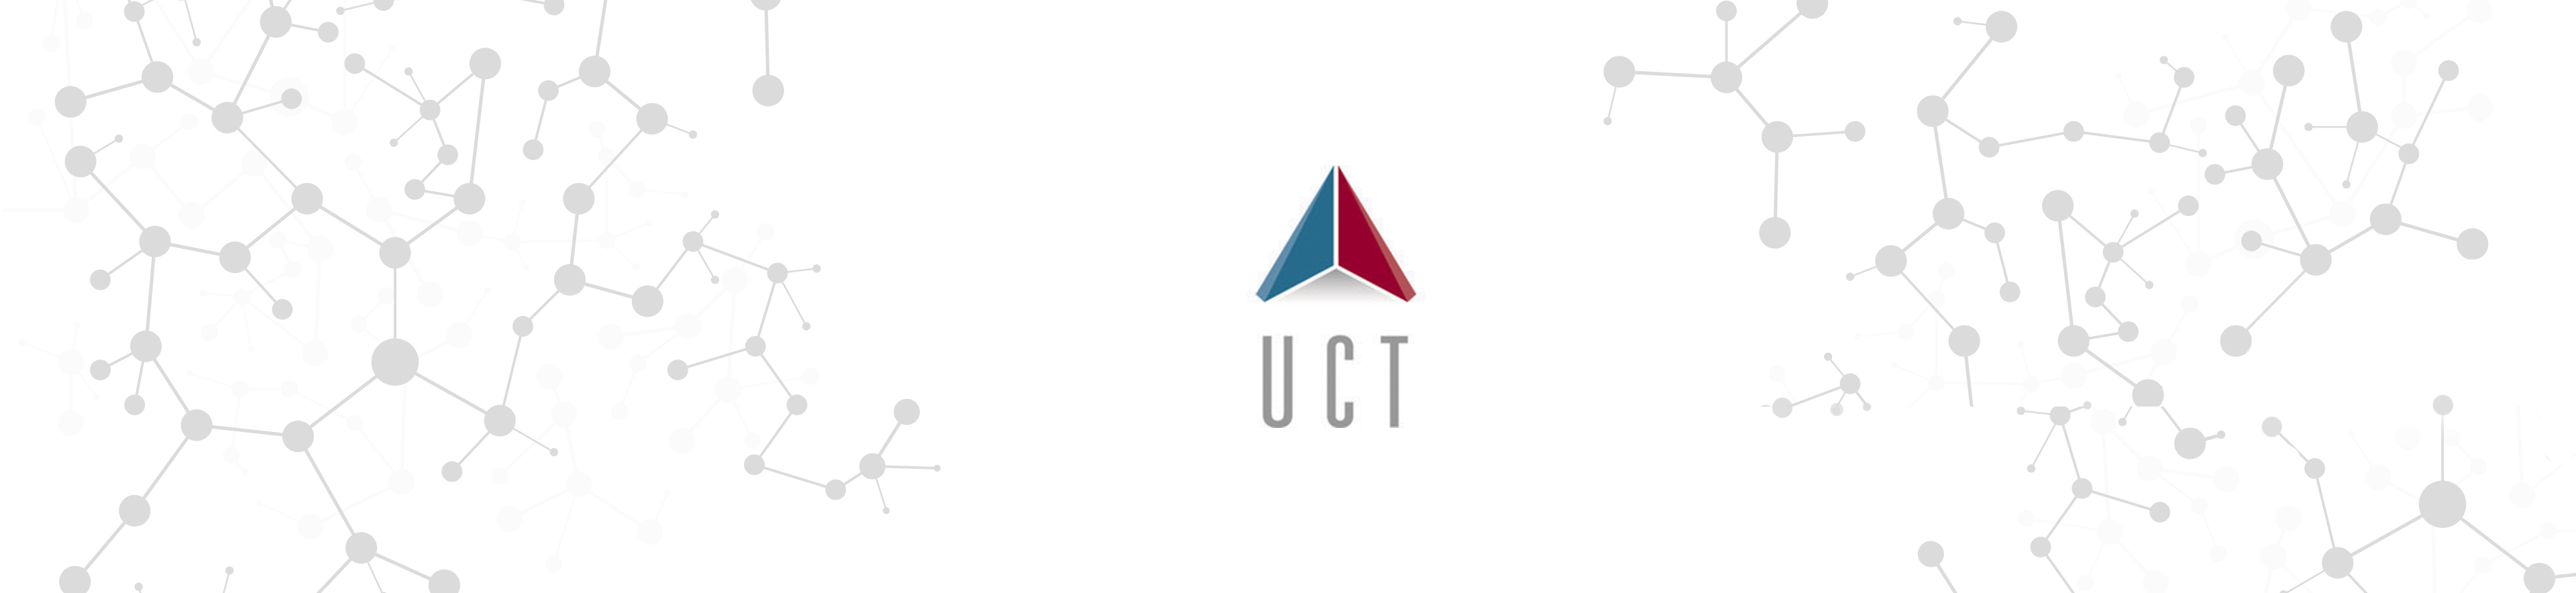 United Chemical Technologies (UCT)